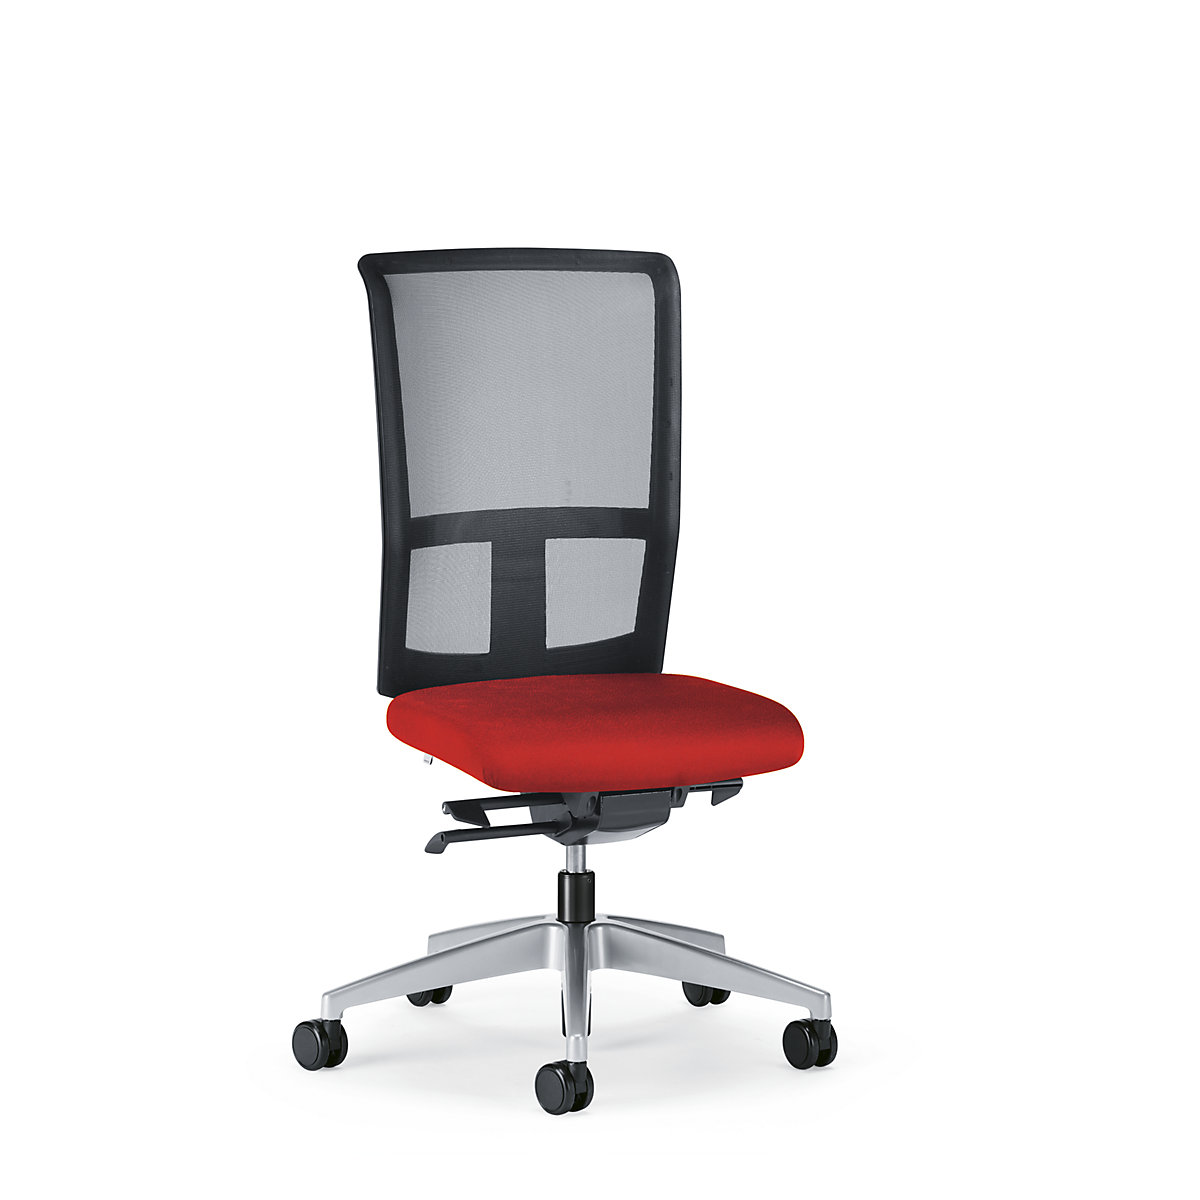 Kancelárska otočná stolička GOAL AIR, výška operadla 545 mm – interstuhl, podstavec briliantová strieborná, s mäkkými kolieskami, ohnivo červená, hĺbka sedadla 410 mm-4